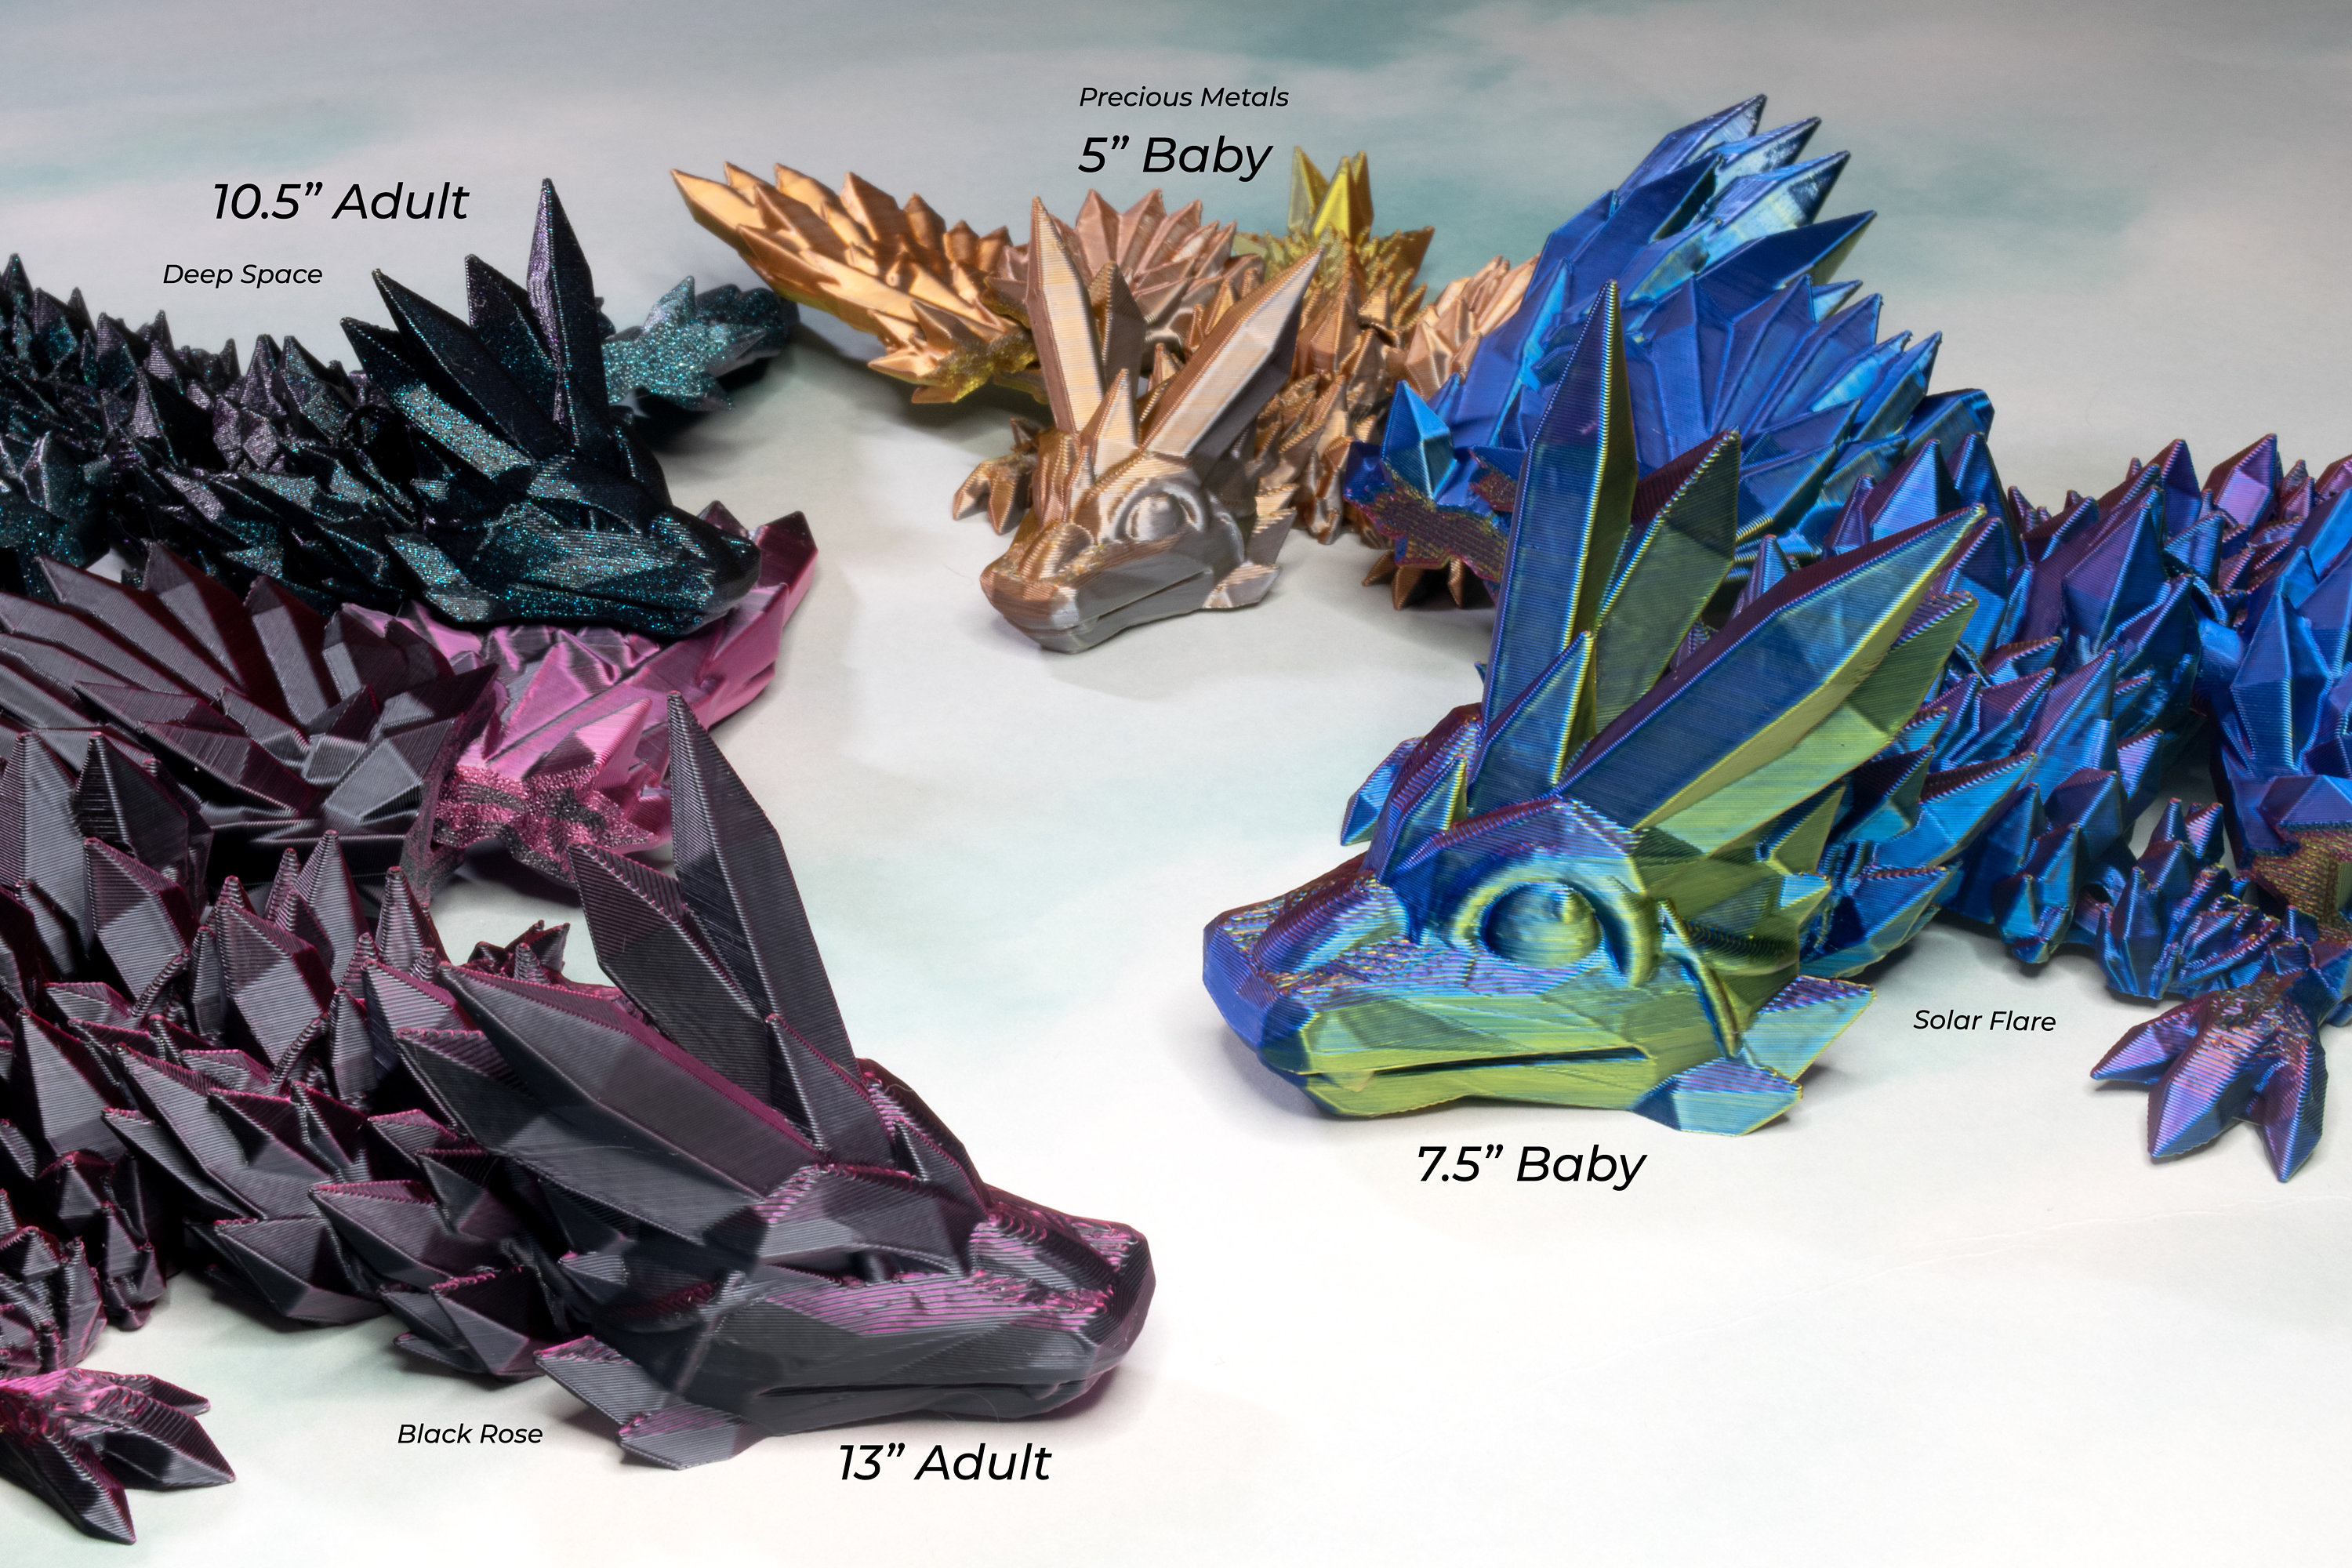 3D Printed Crystal Dragon Sensory Fidget Toy – Wyvern's Hoard